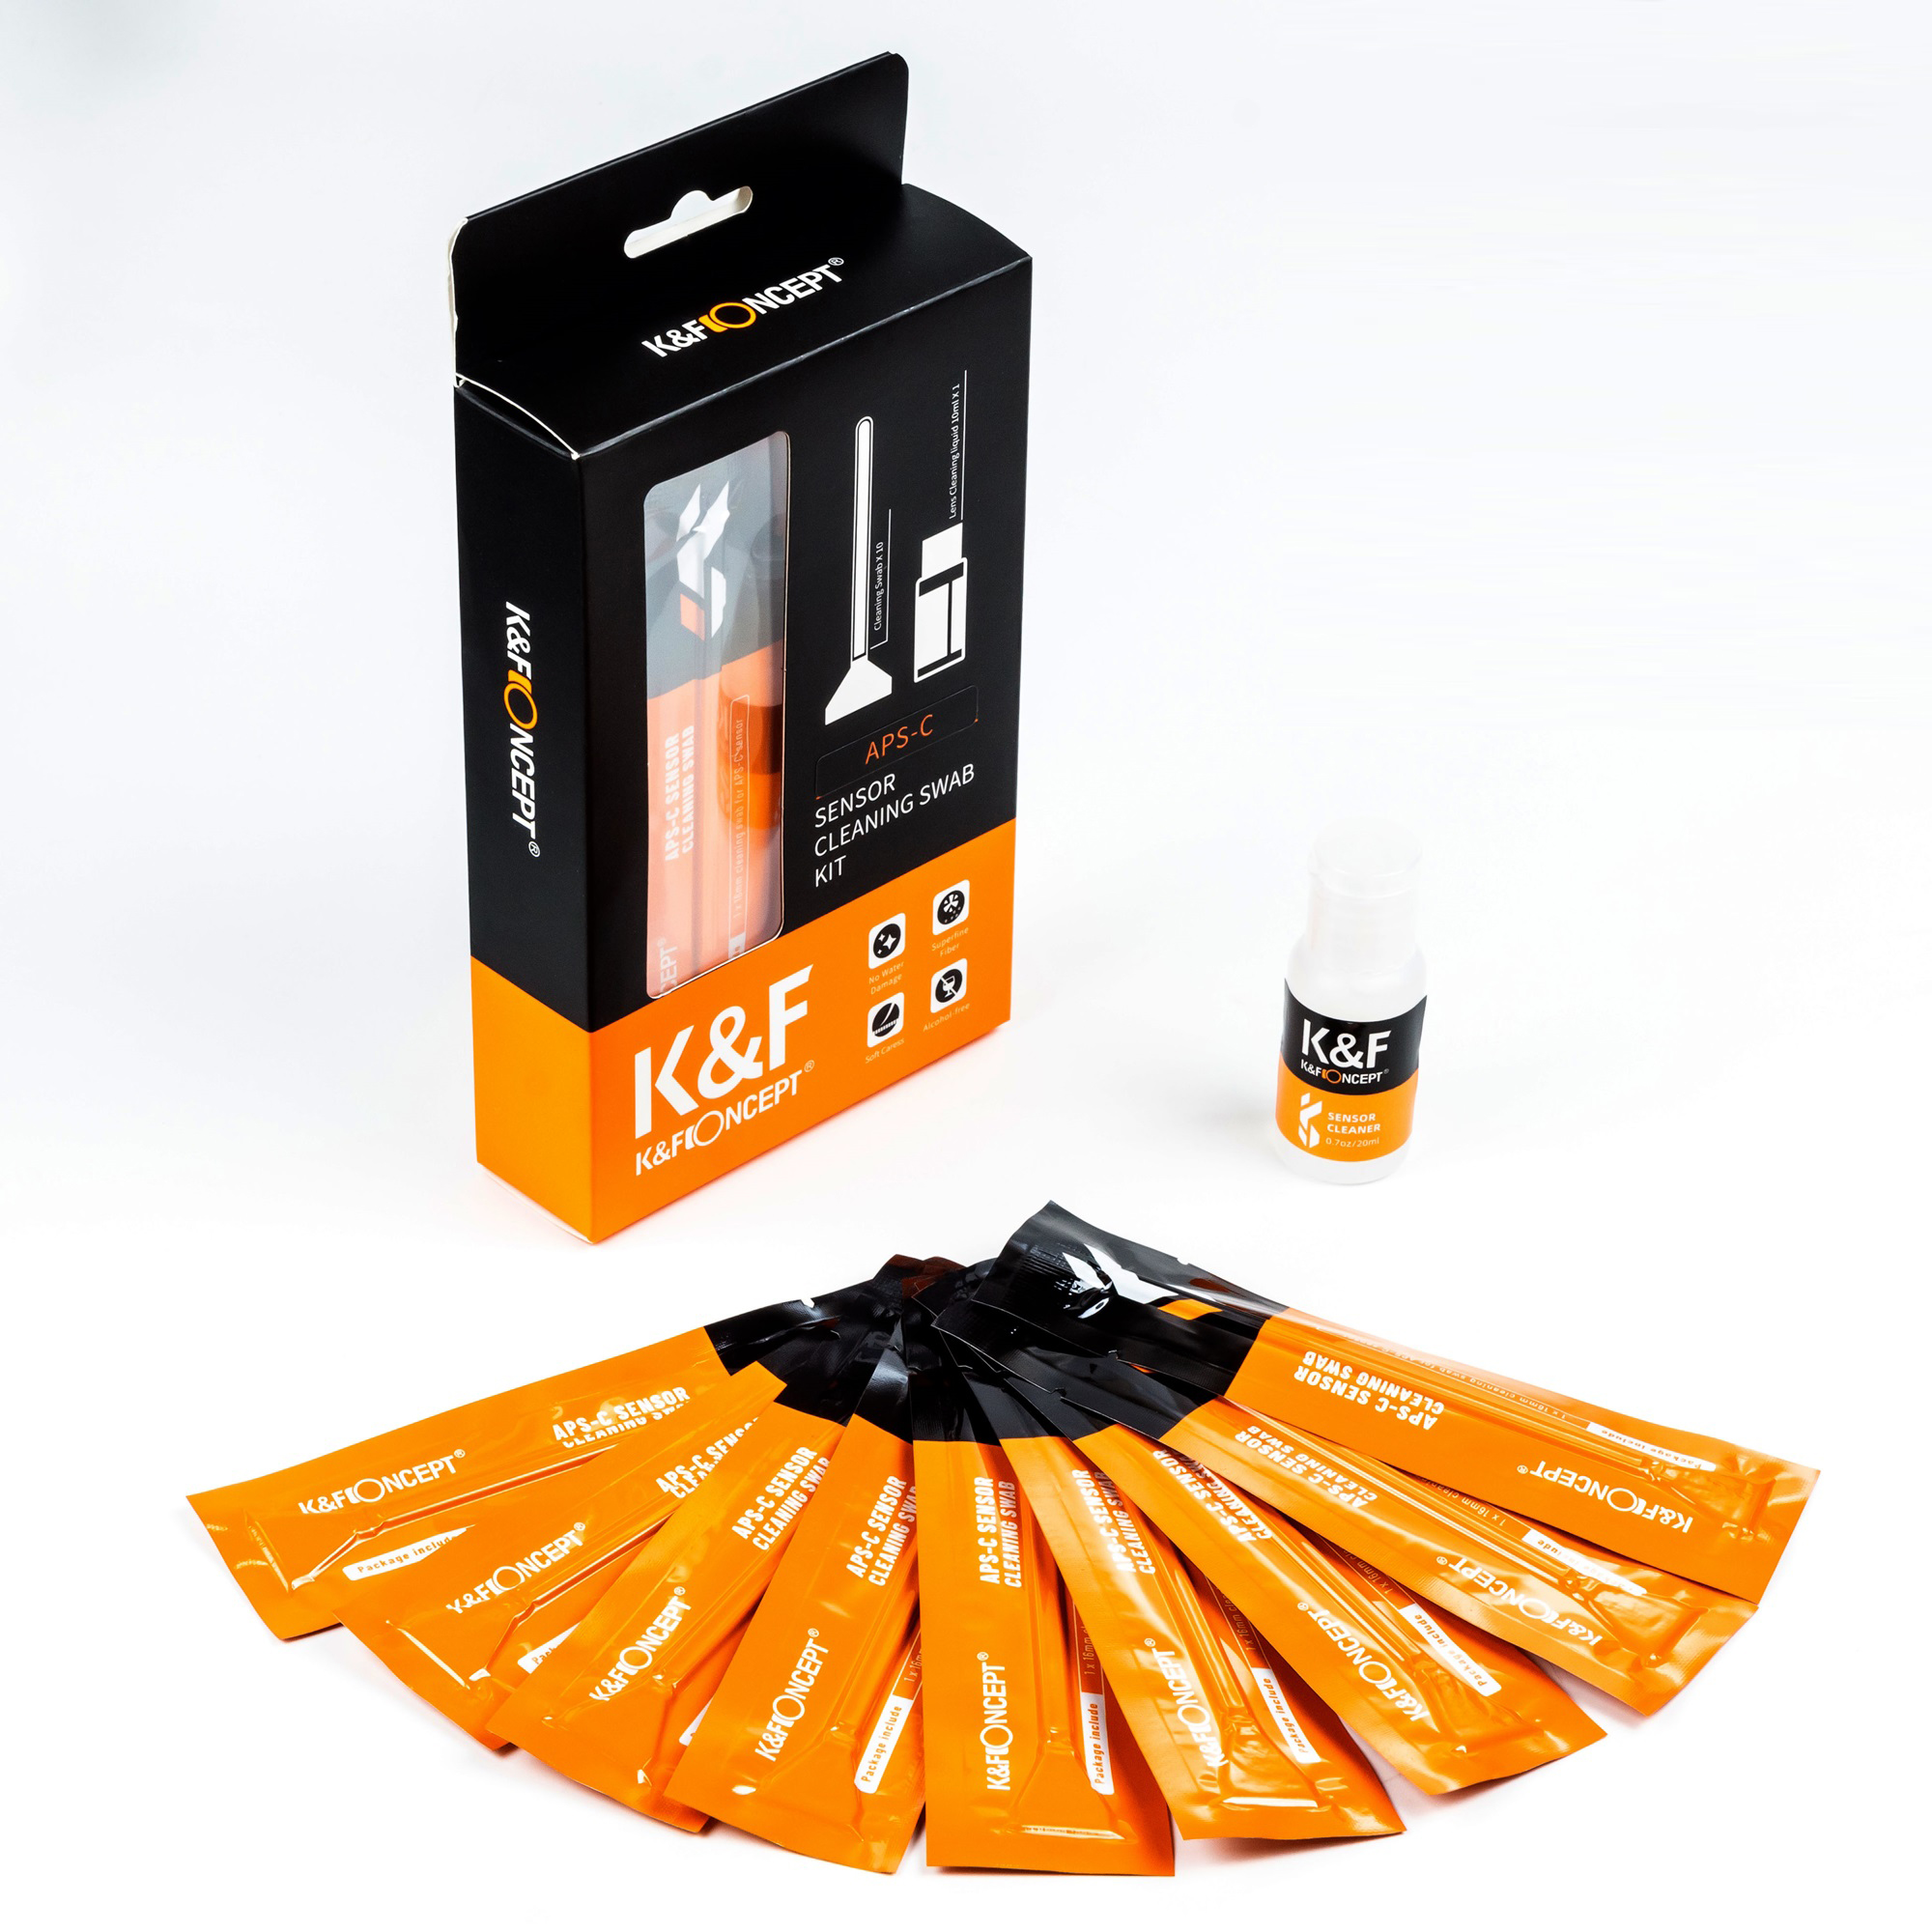 K&F CONCEPT 16mm APS-C SENSOR CLEANING SWAB KIT (SKU.1616)